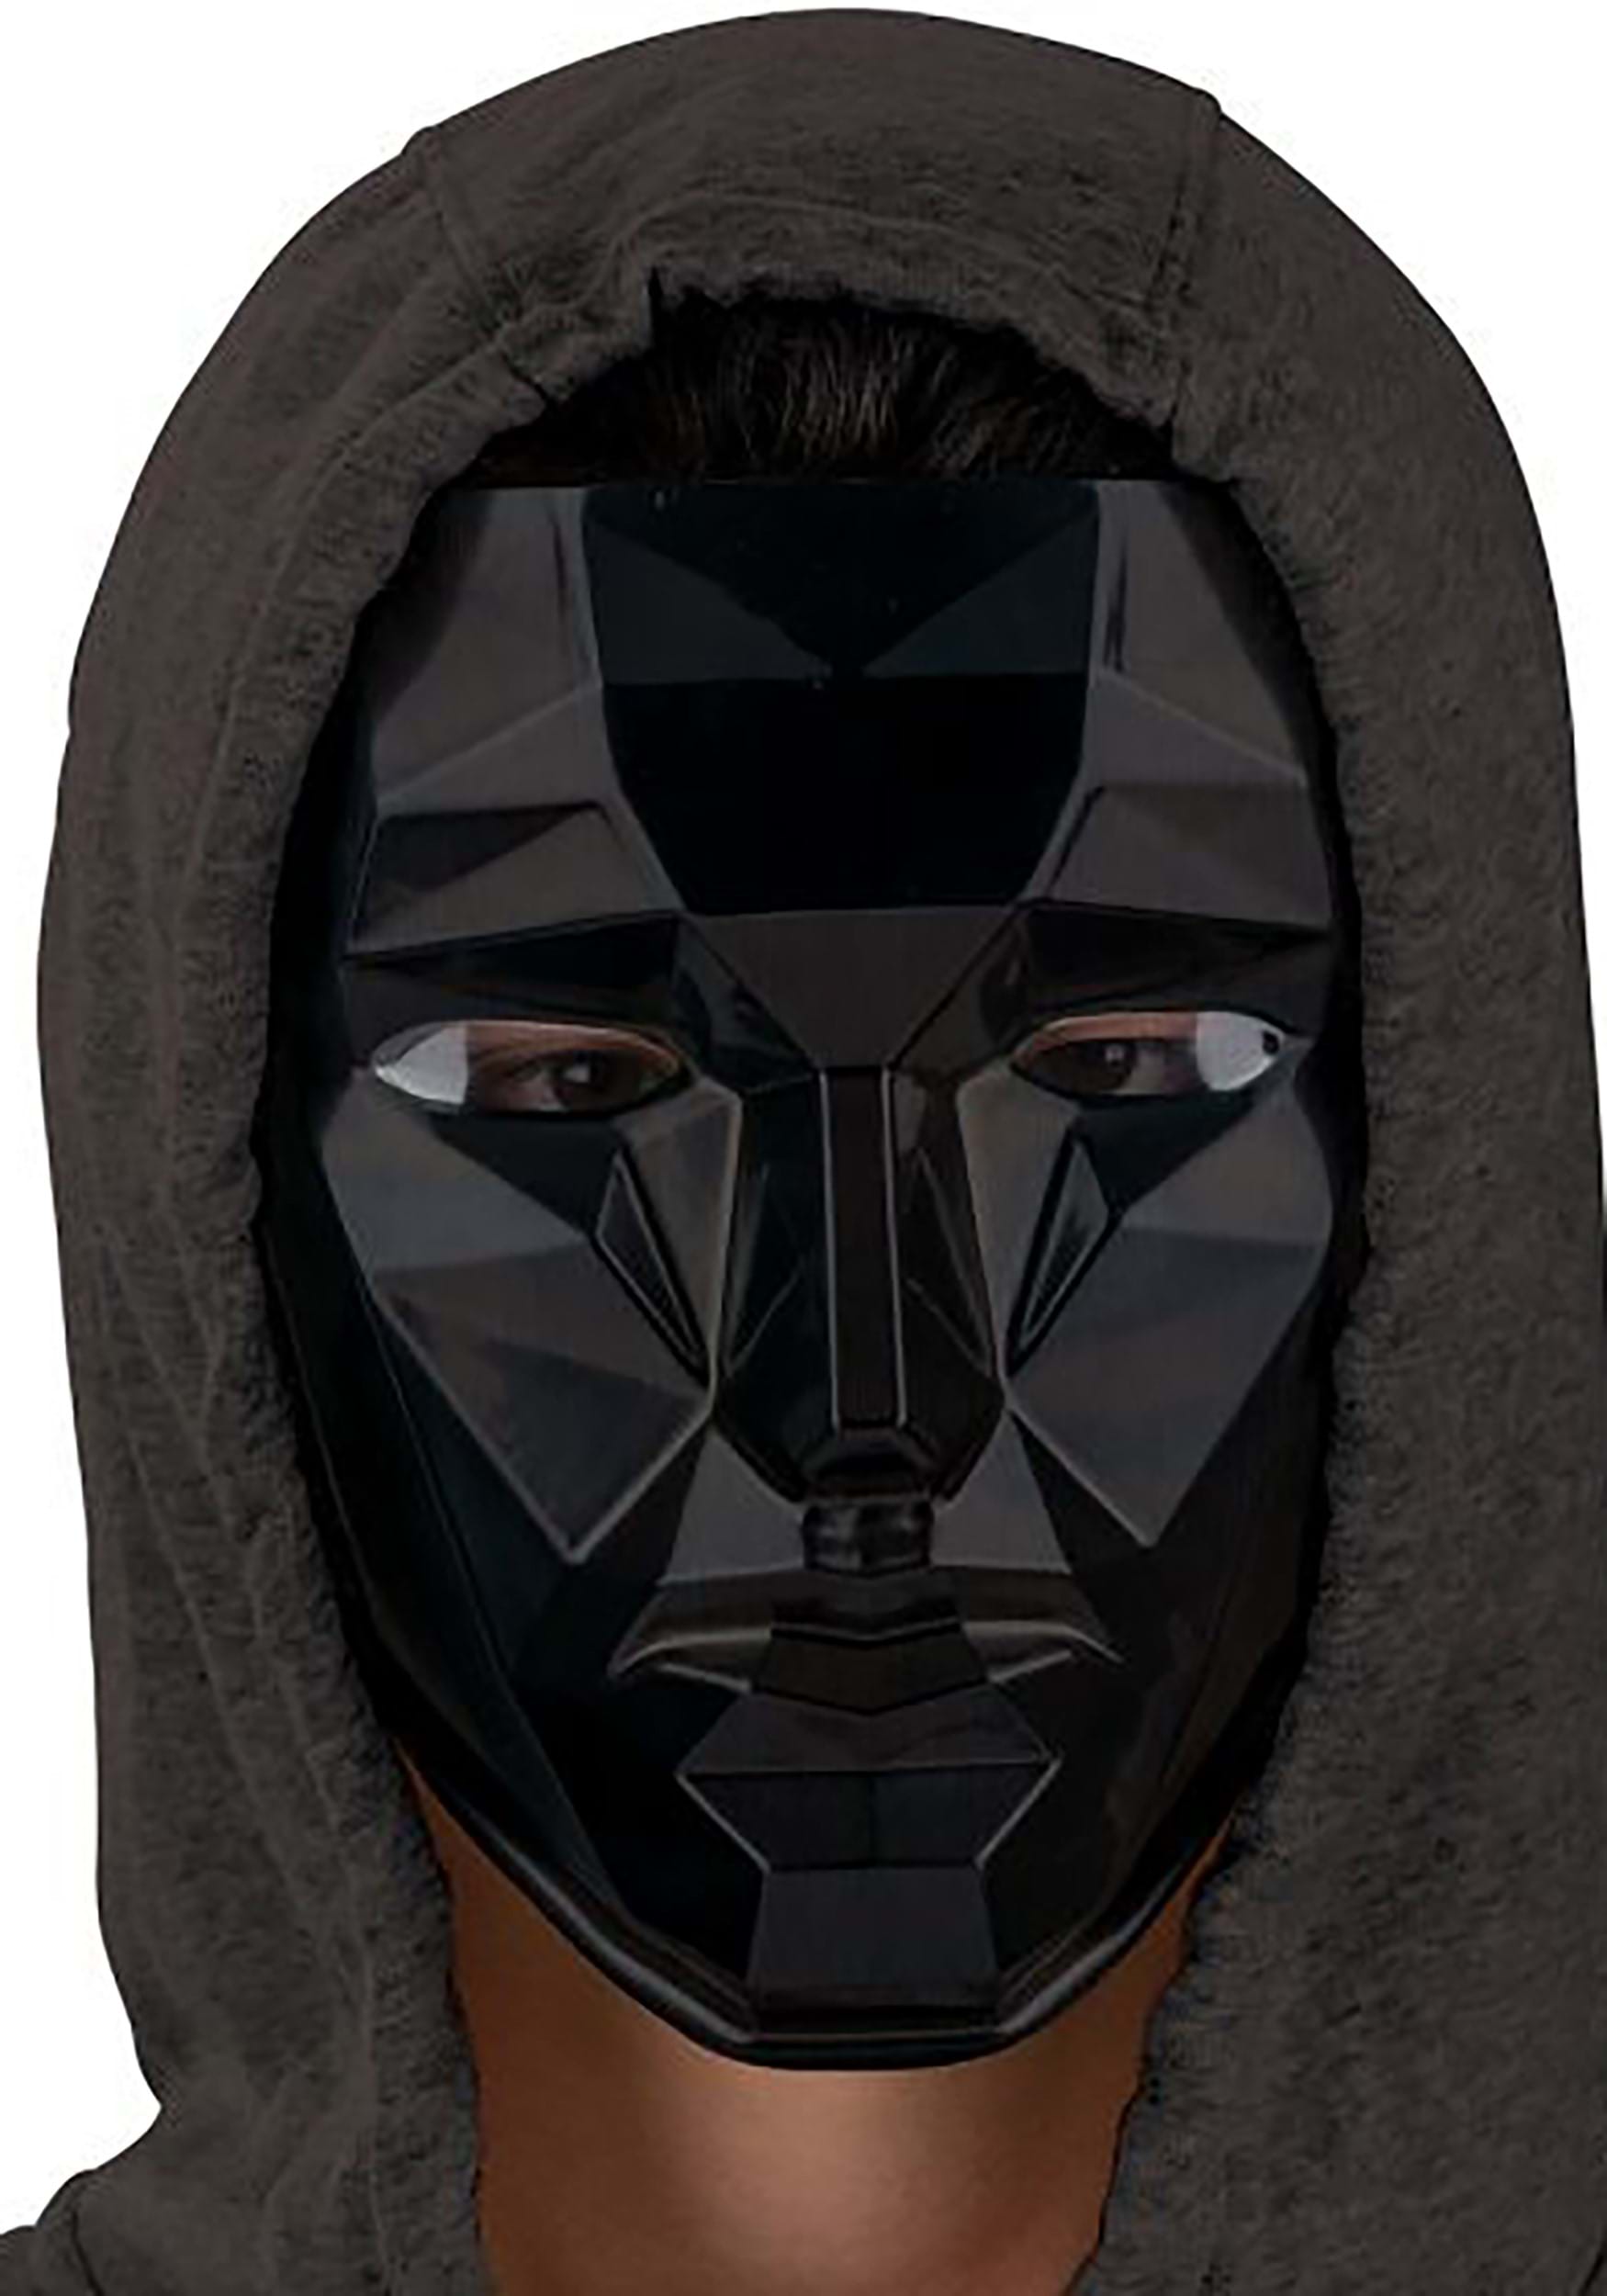 Nx F F M S Game Mask €11.30 smarthubpublishers.com